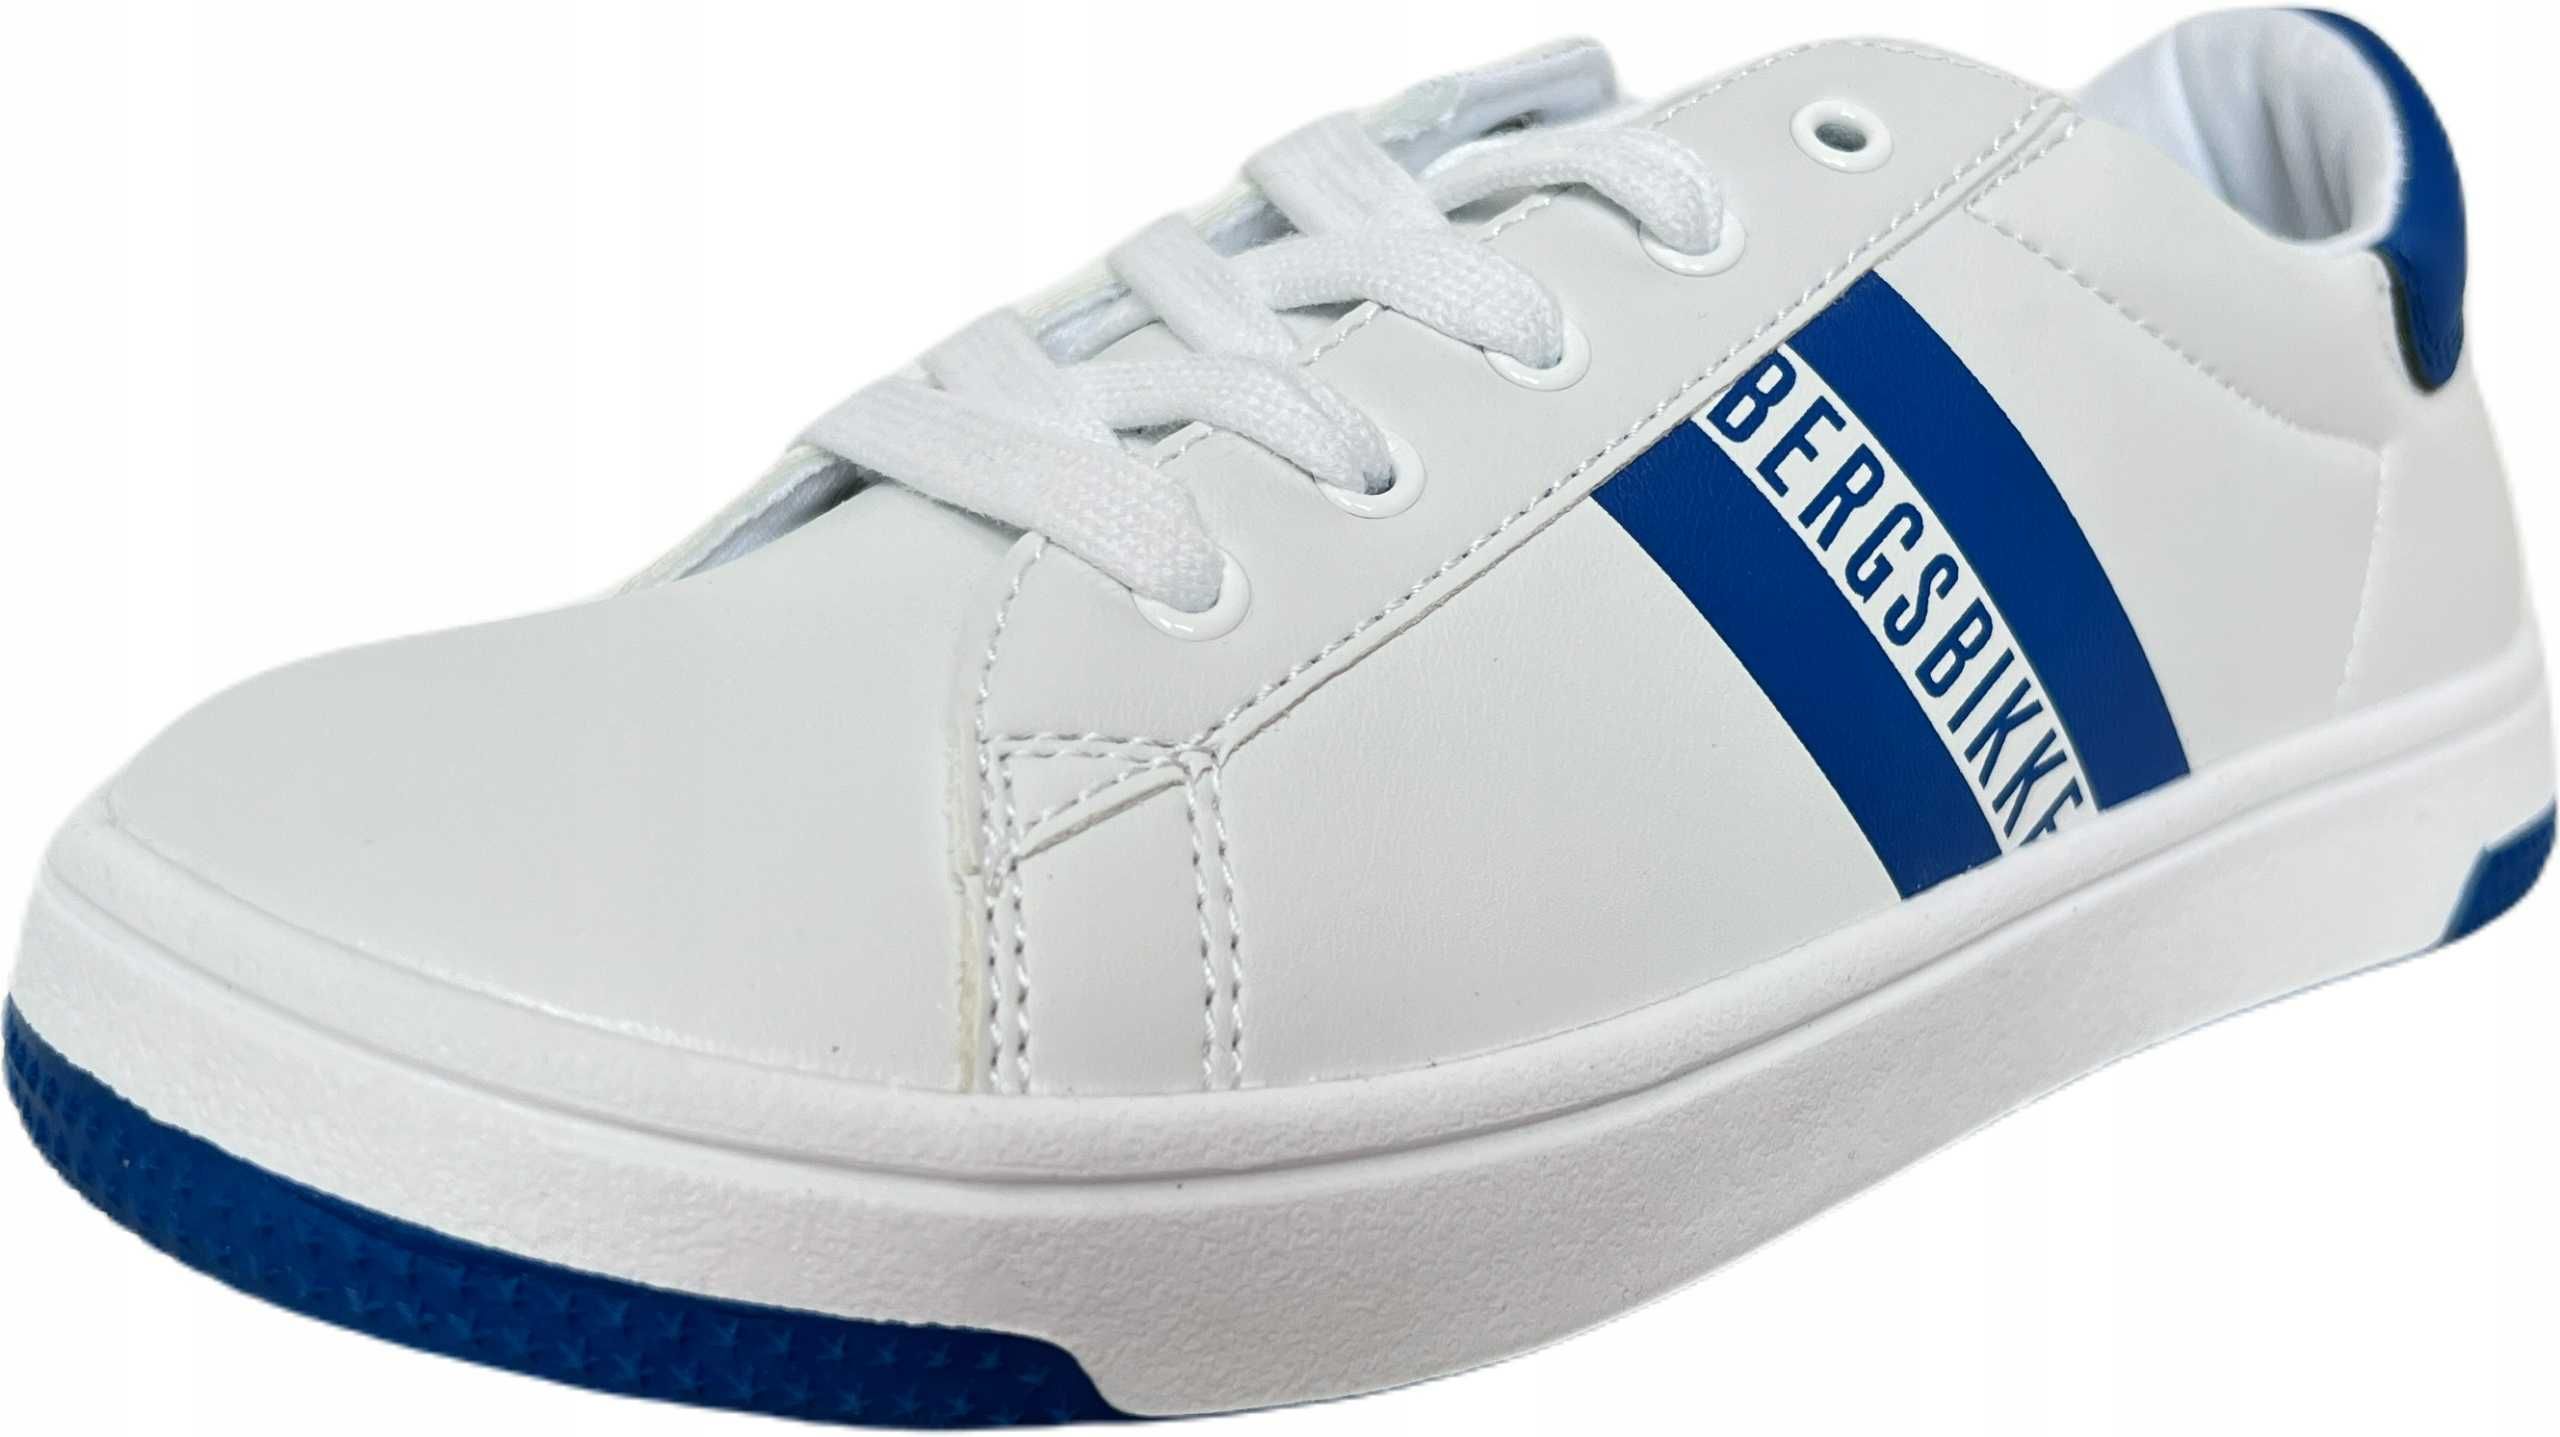 Buty dziecięce Bikkembergs K3B4 White Royal Sneakers R:35